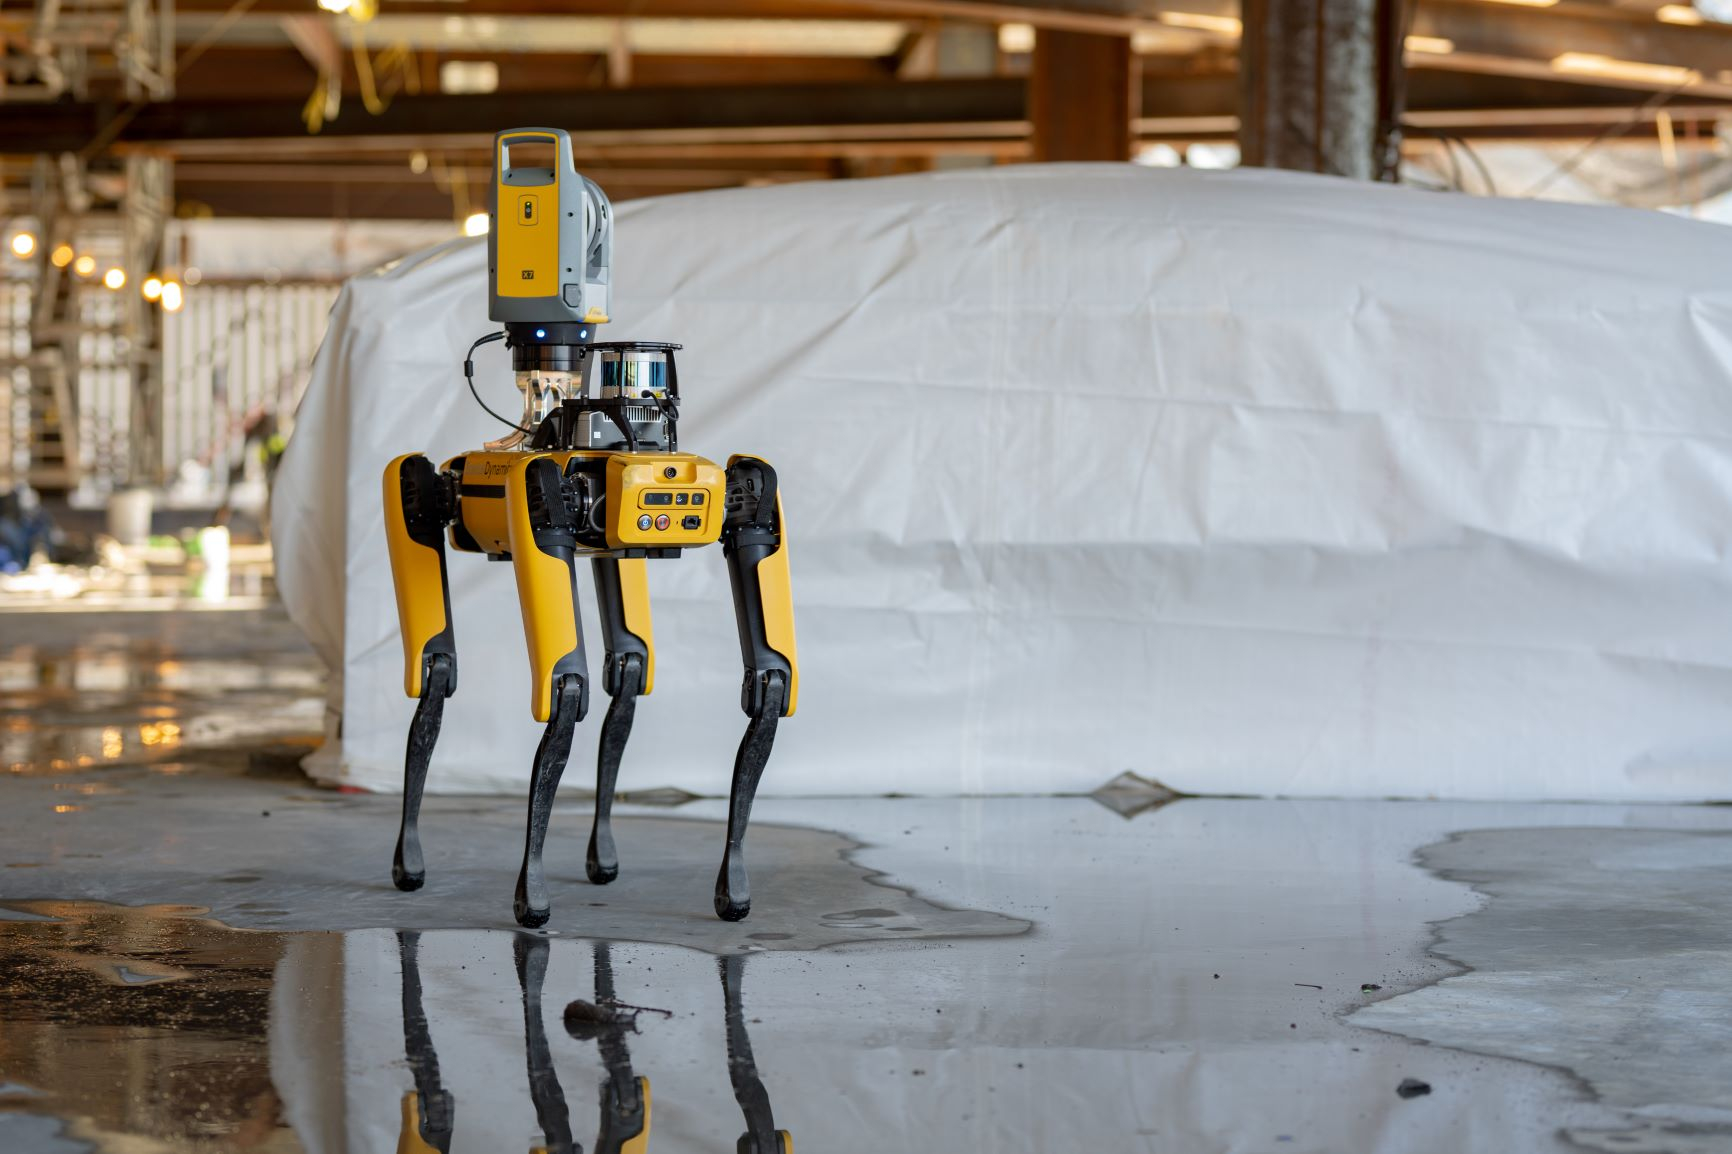 Boston Dynamics選用Velodyne的感測器為其靈活行動機器人提供感知和導航能力。這些機器人能夠應對要求極為嚴苛的機器人技術挑戰。圖中Boston Dynamics的Spot行動機器人配備了Velodyne雷射雷達感測器。（照片： Boston Dynamics）